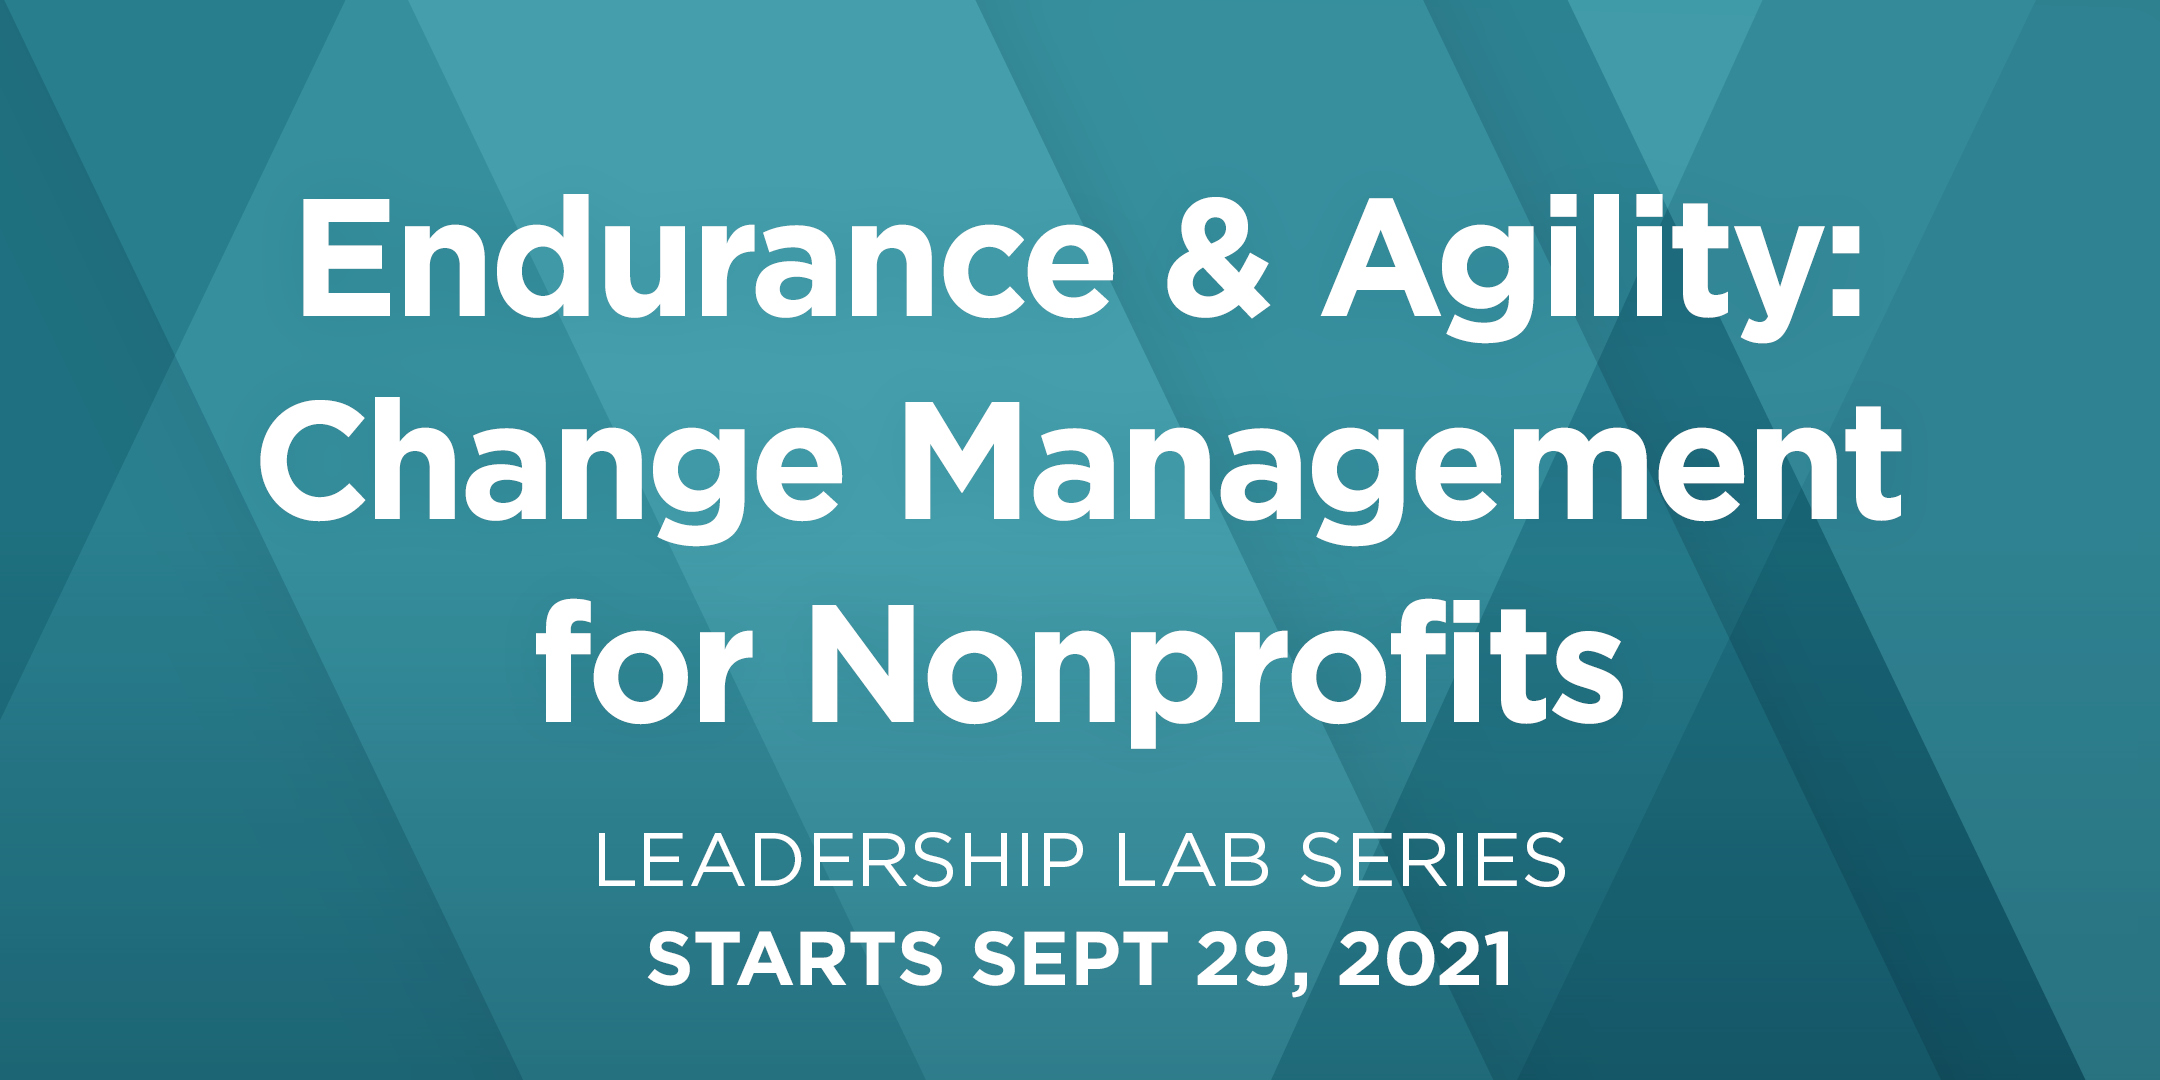 Endurance & Agility: Change Management for Nonprofits (A Leadership Lab Series)